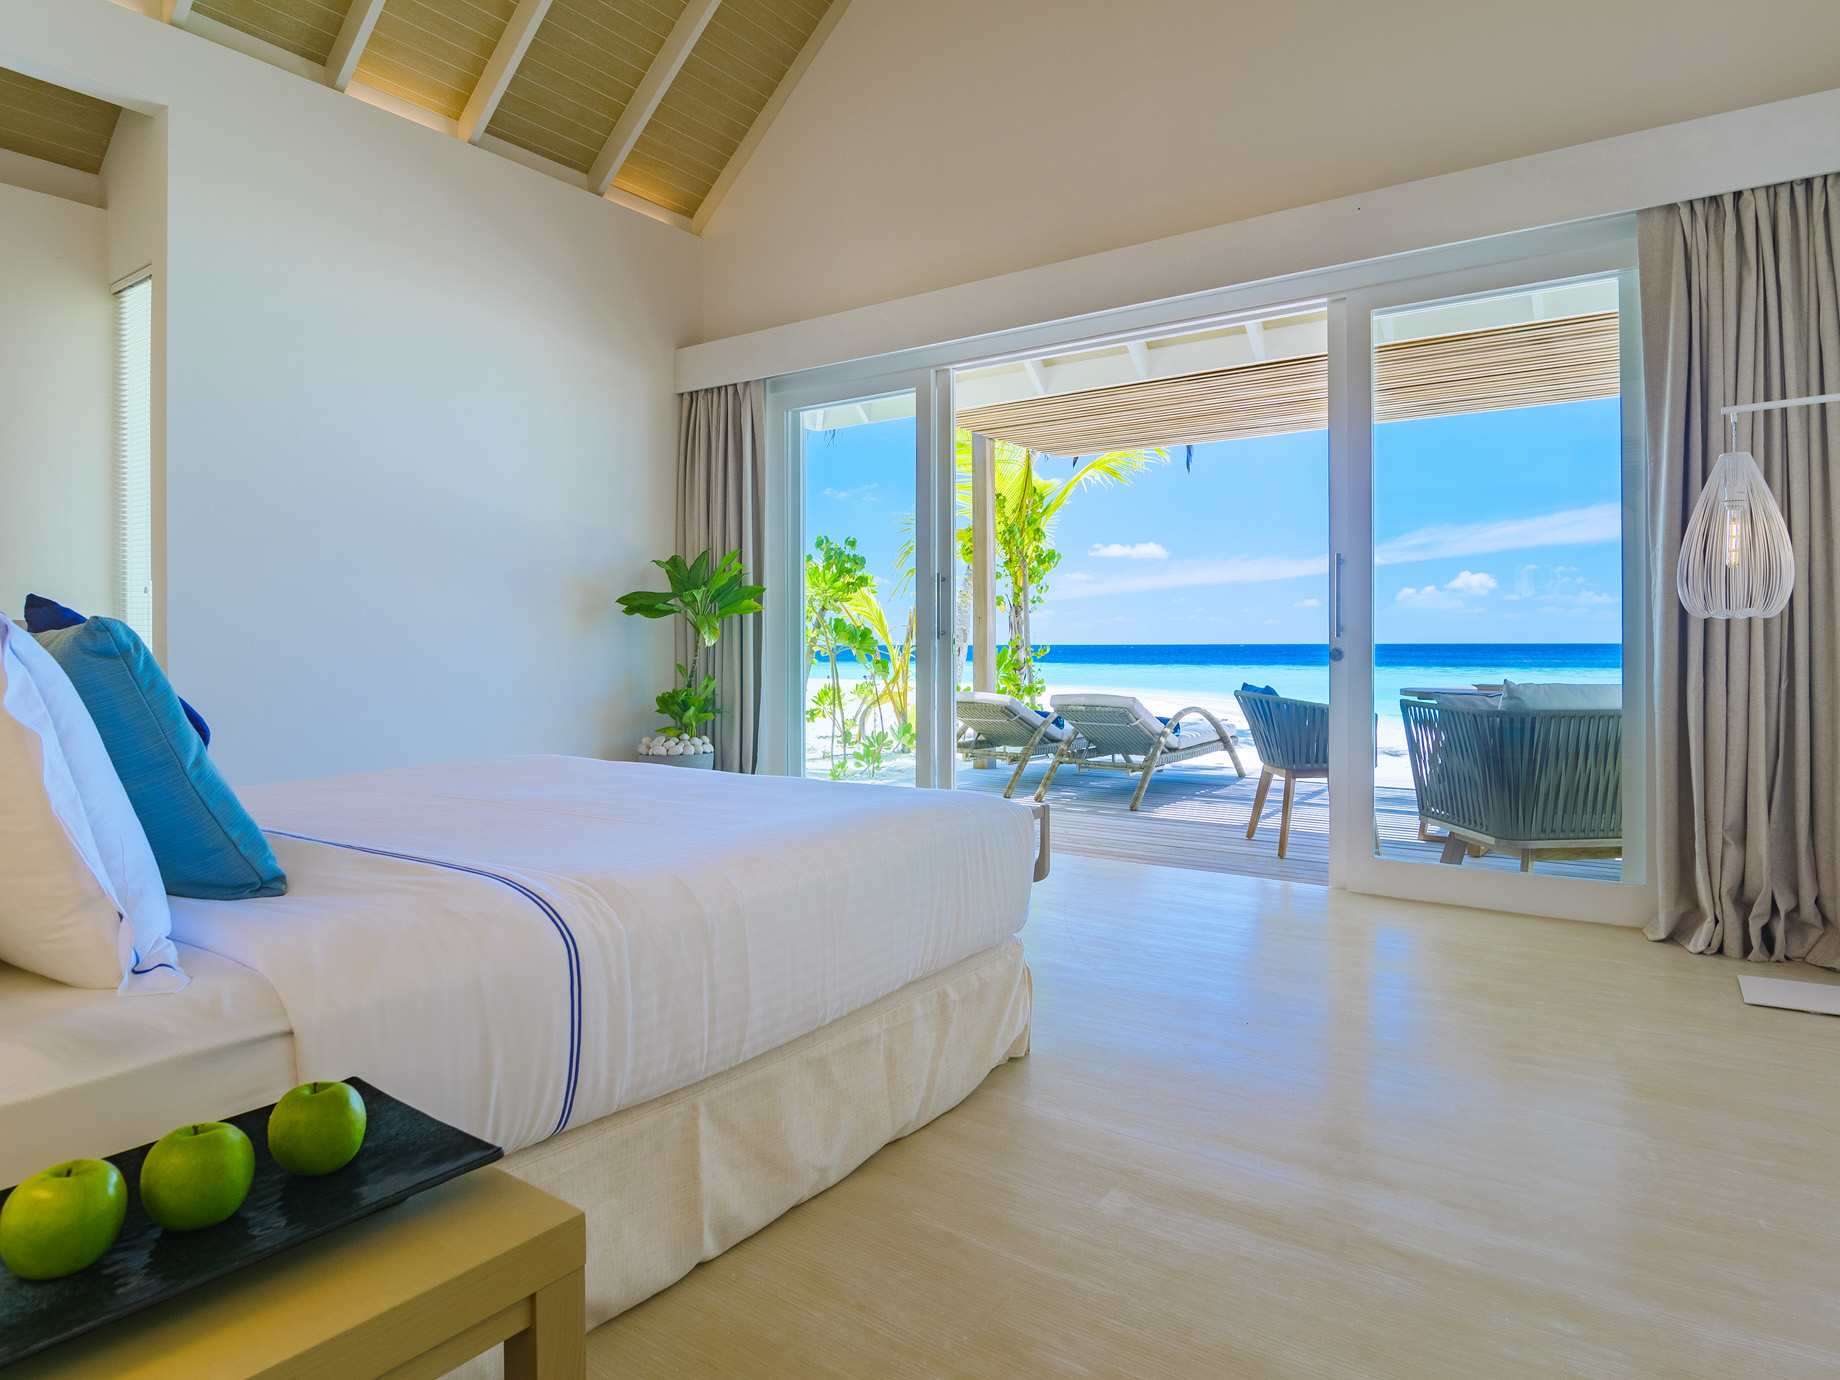 Baglioni Resort Maldives – Maagau Island, Rinbudhoo, Maldives – Beach Pool Villa Interior